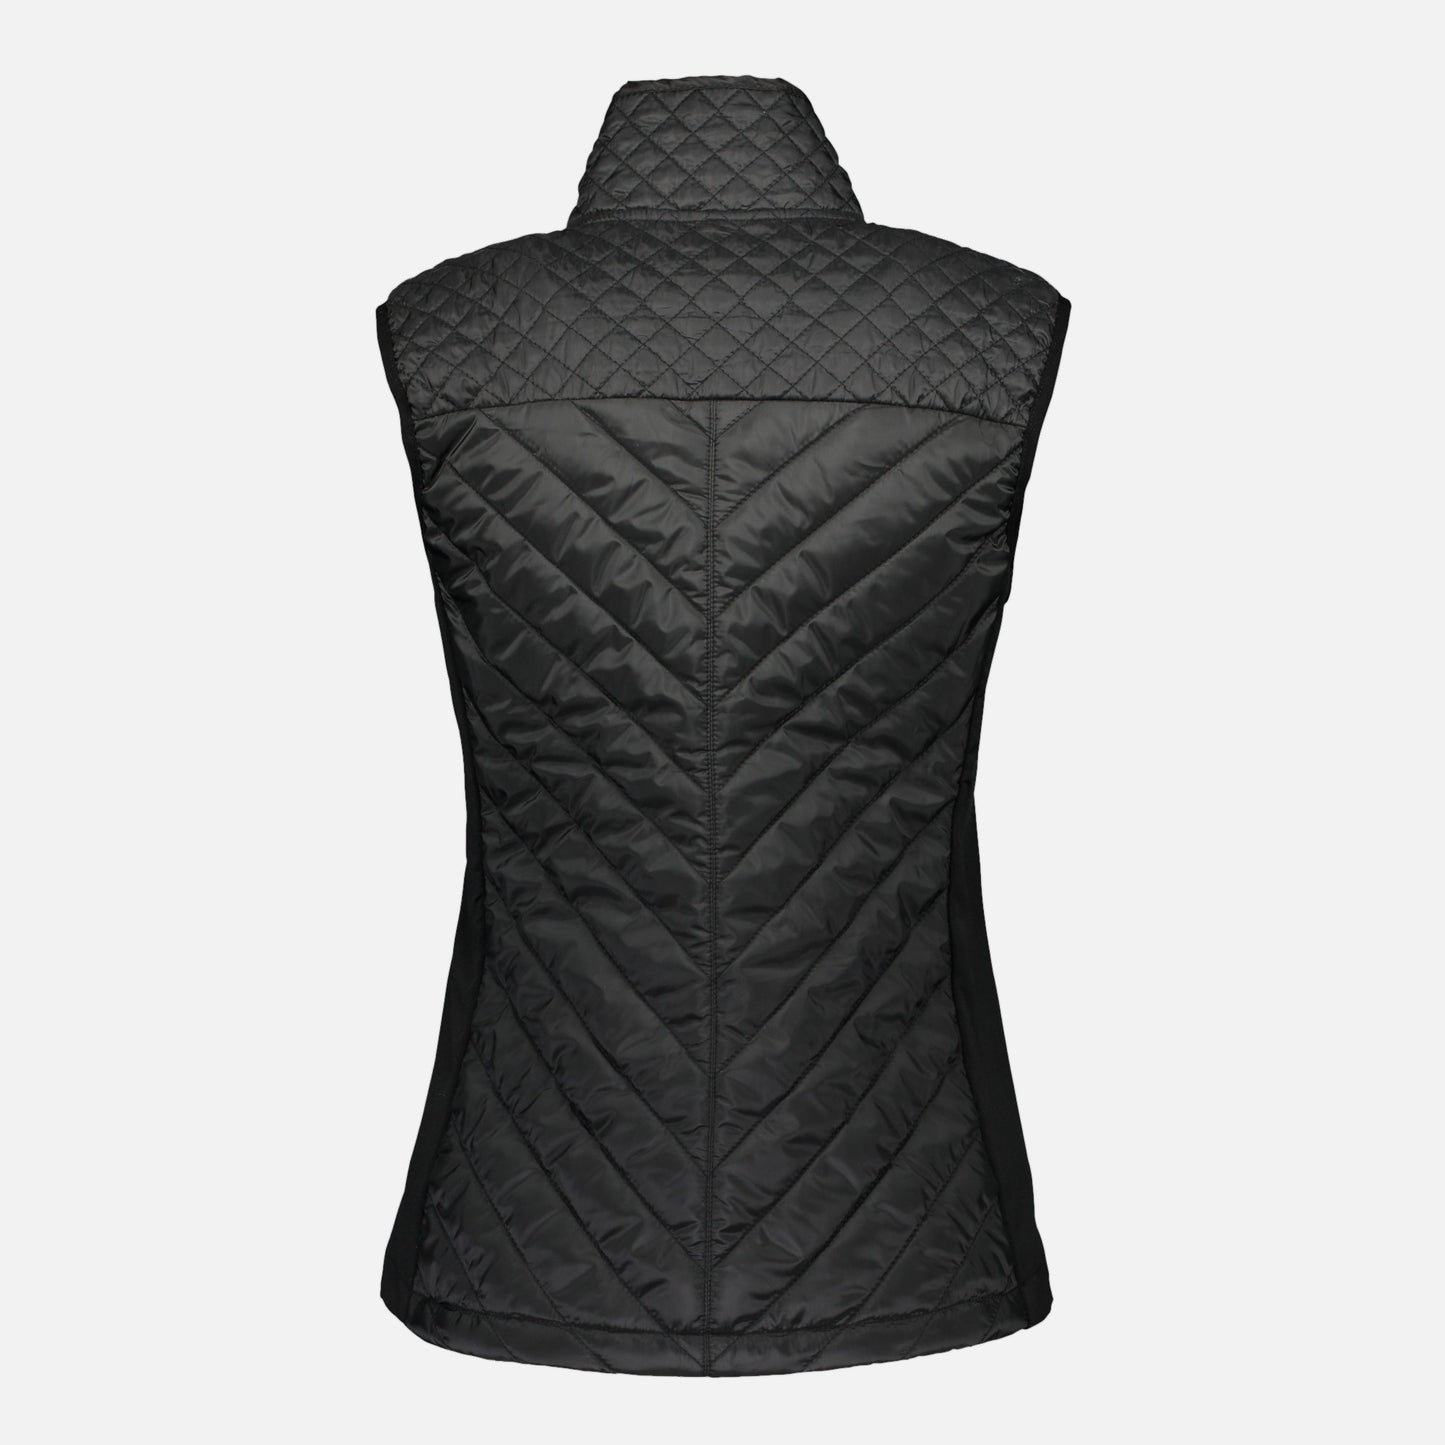 891028 Catmandoo Ladies Quilted Vest Black Product Image Rear